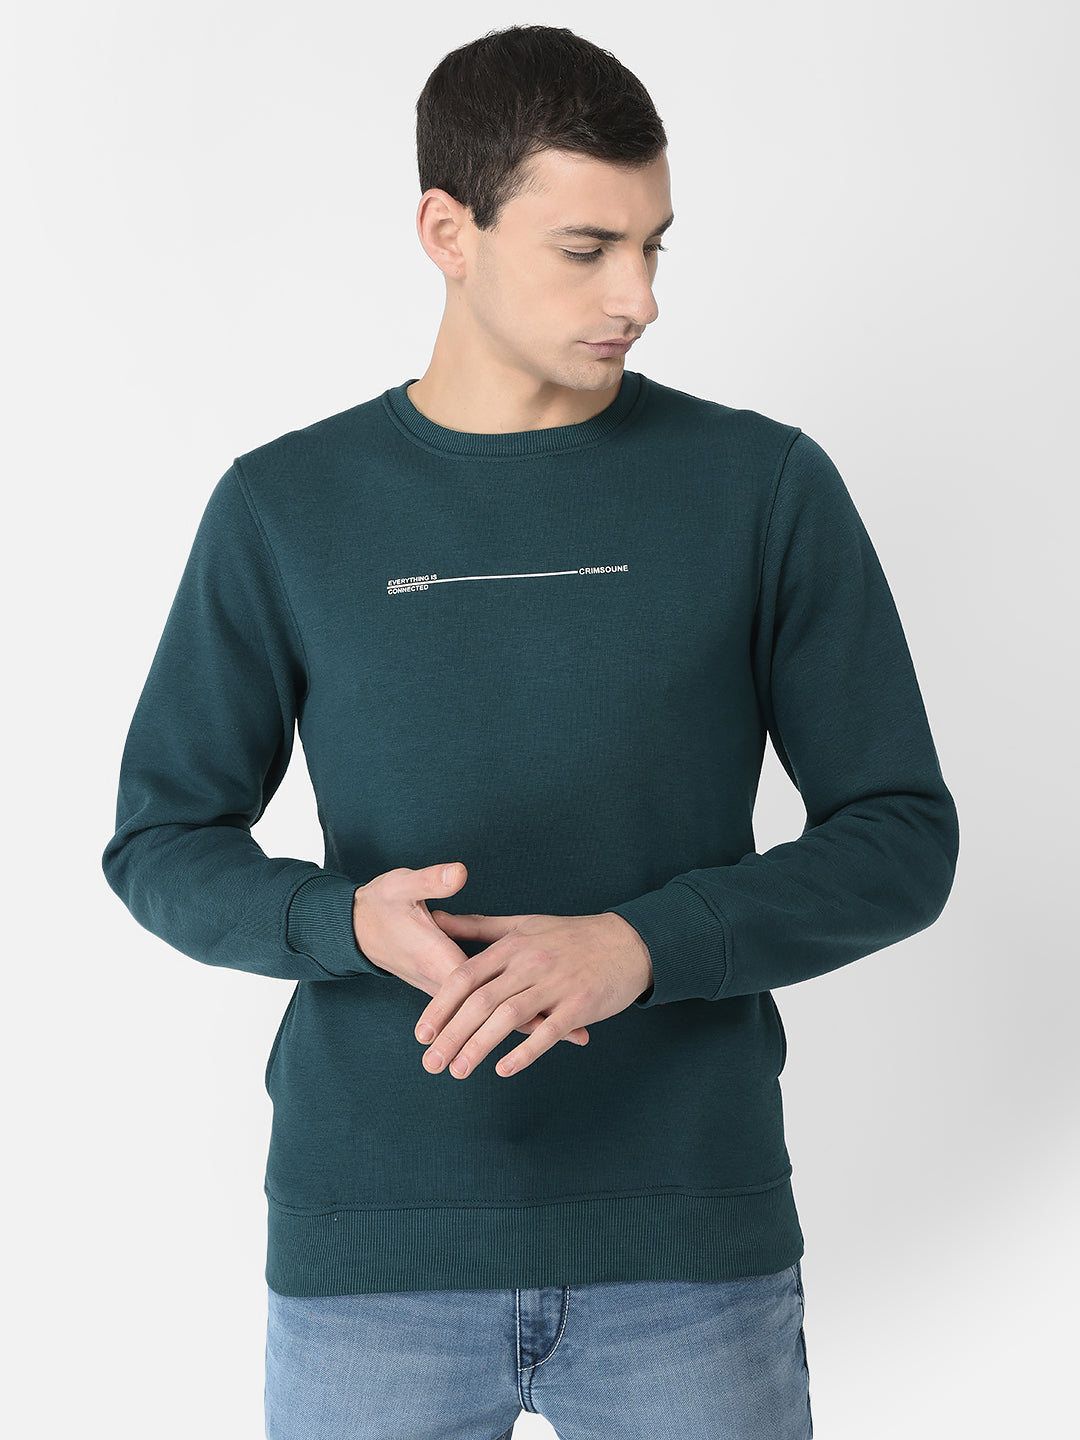  Teal Green Connection Sweatshirt